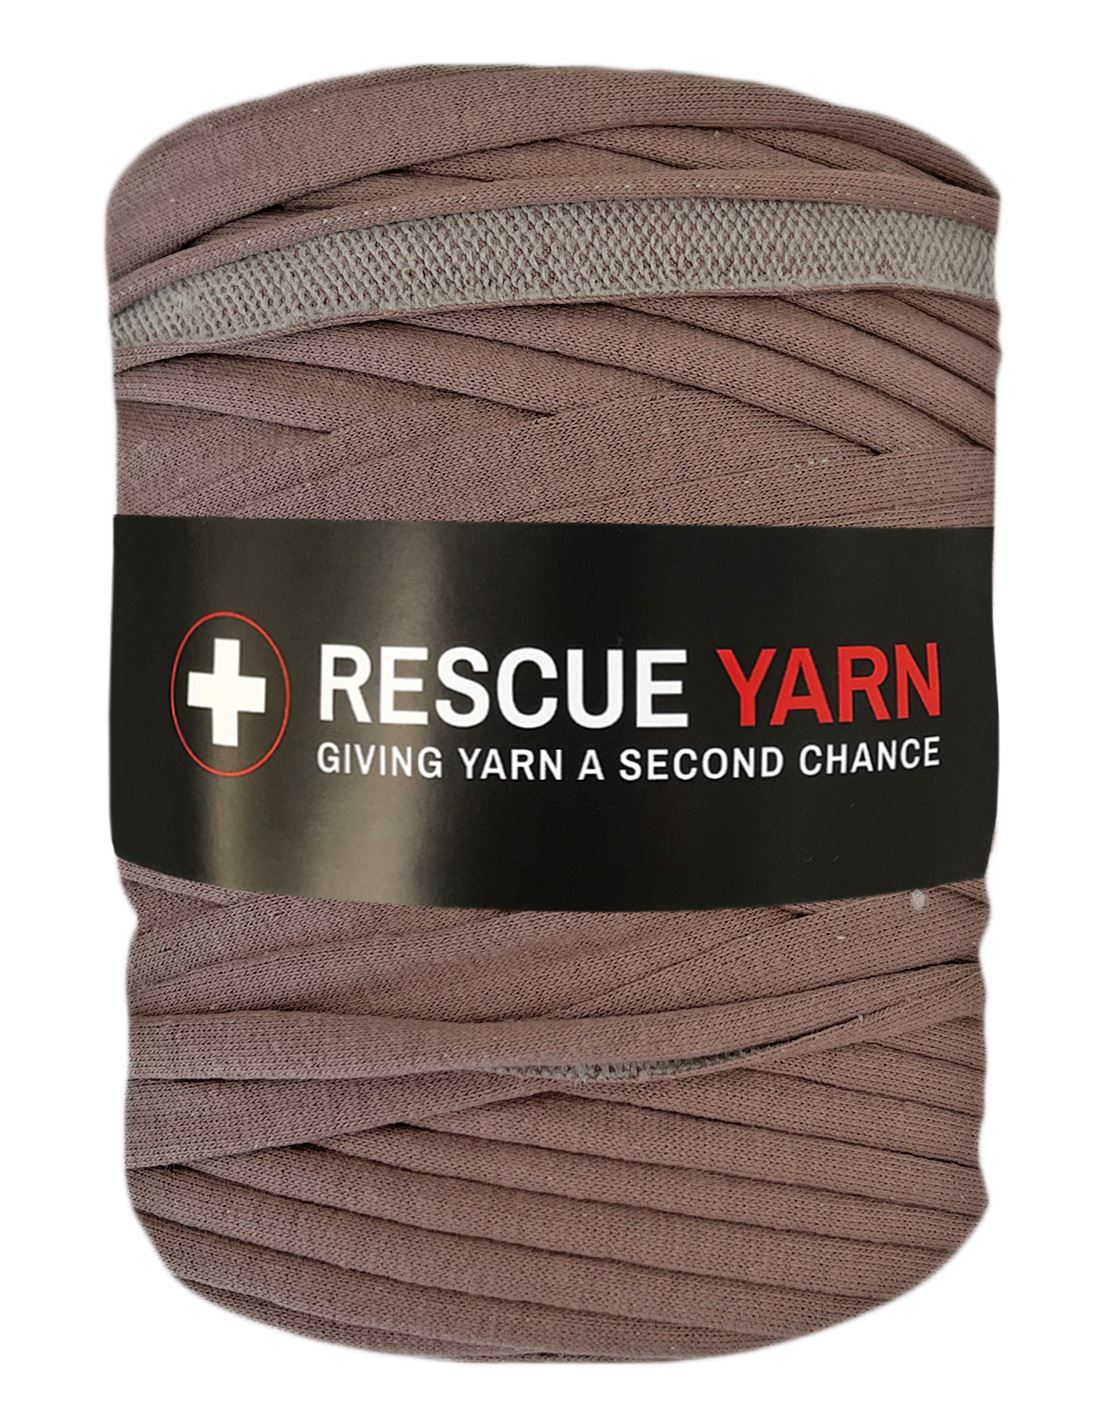 Pale grape t-shirt yarn by Rescue Yarn (100-120m)